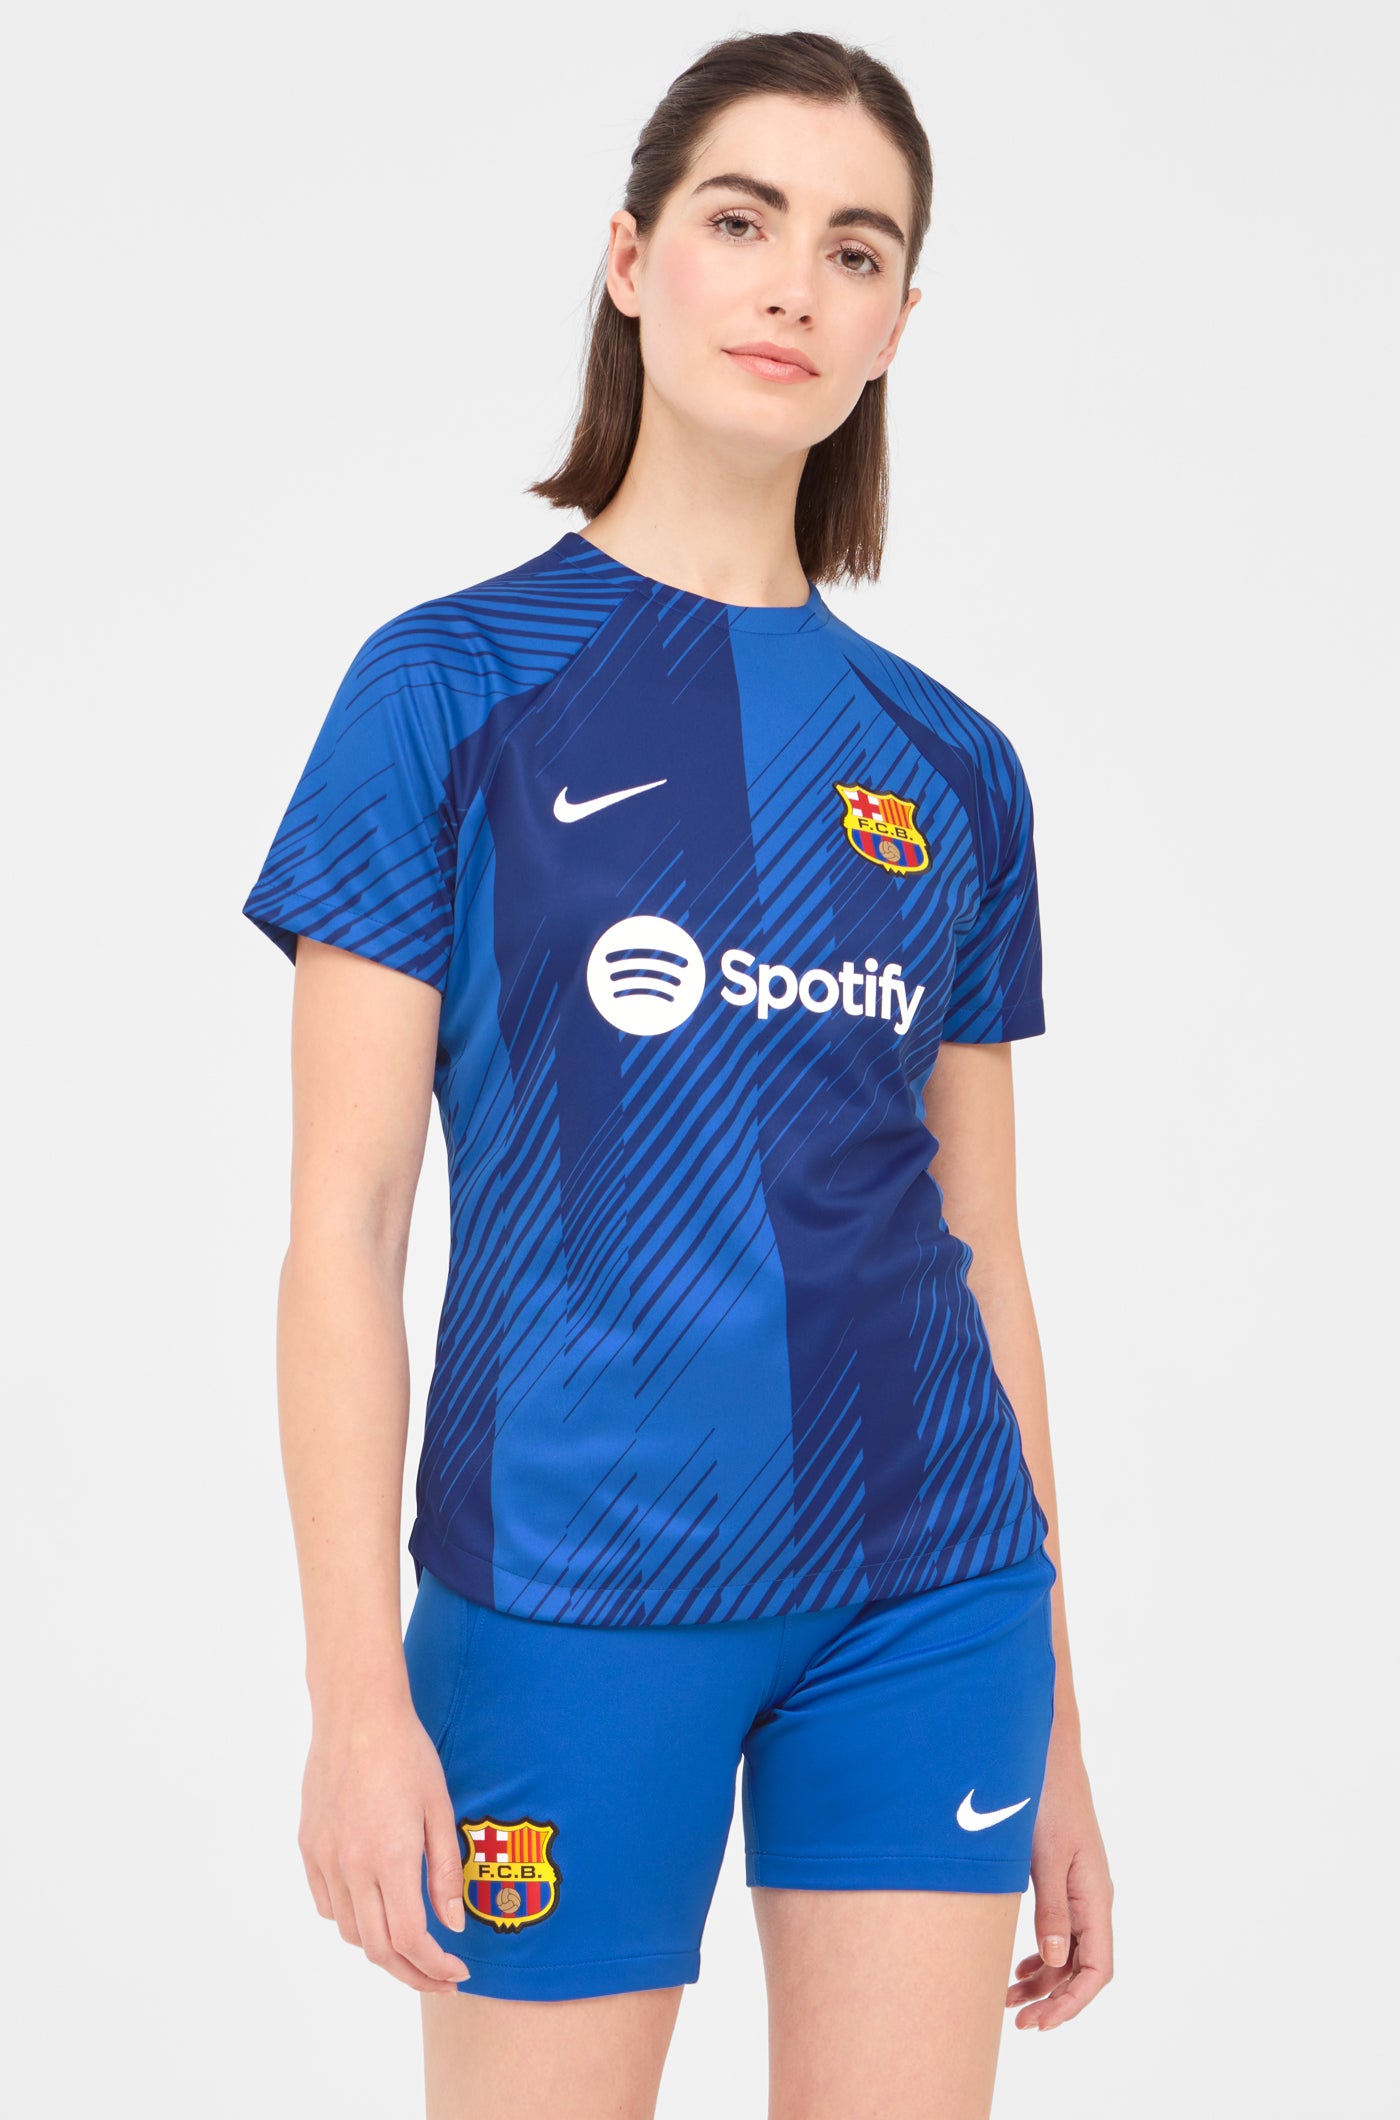 FC Barcelona and Spotify's Rosalía Football Kits